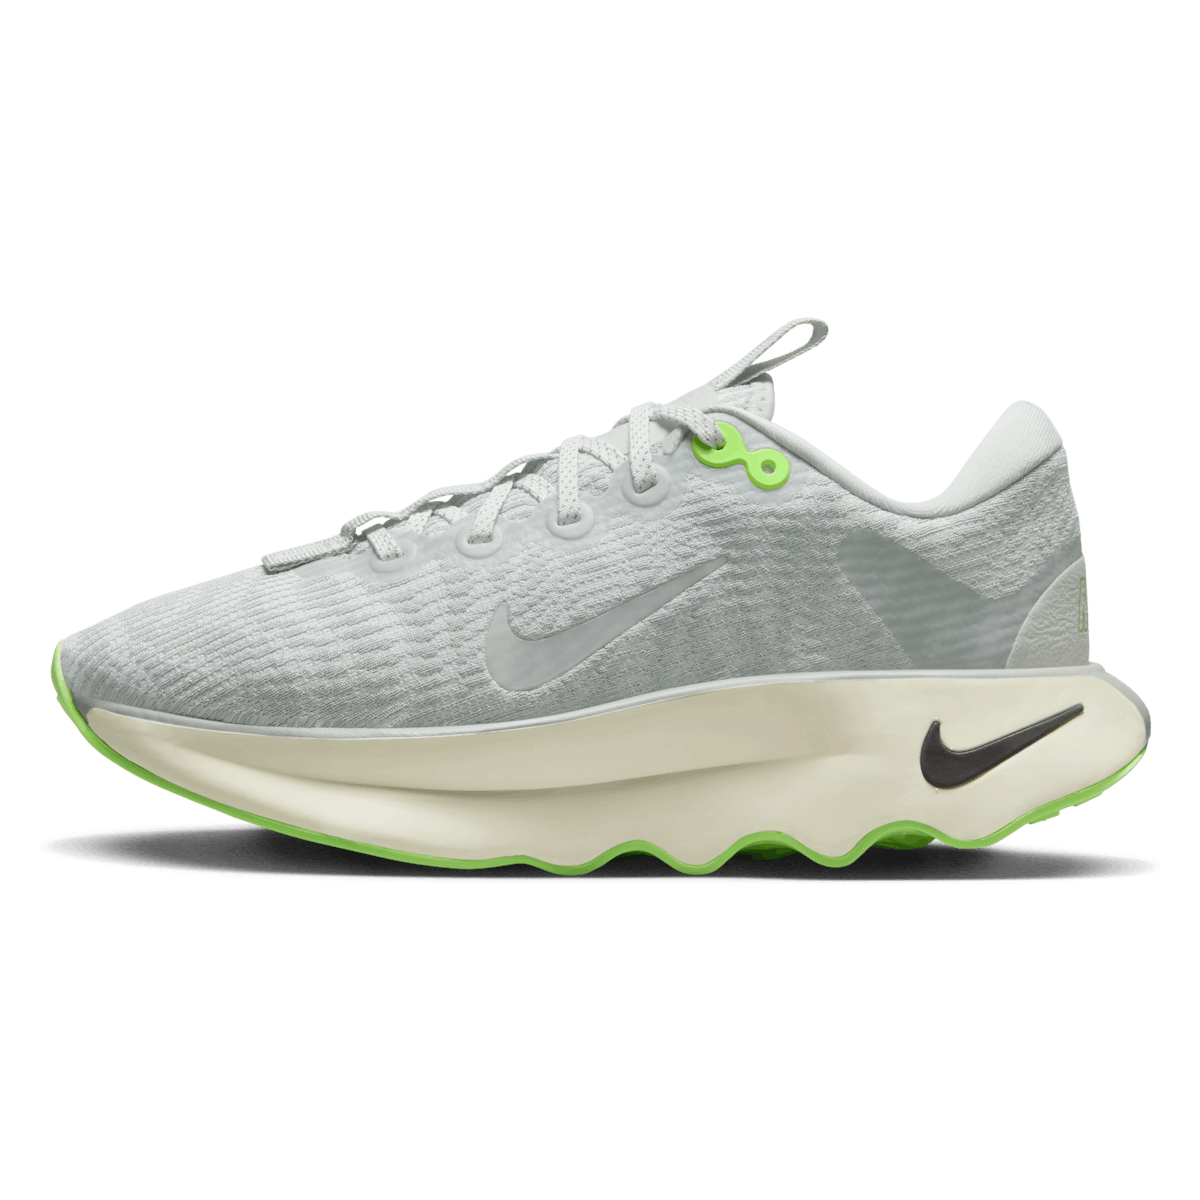 Nike Motiva Light Silver Green Strike (Women's)